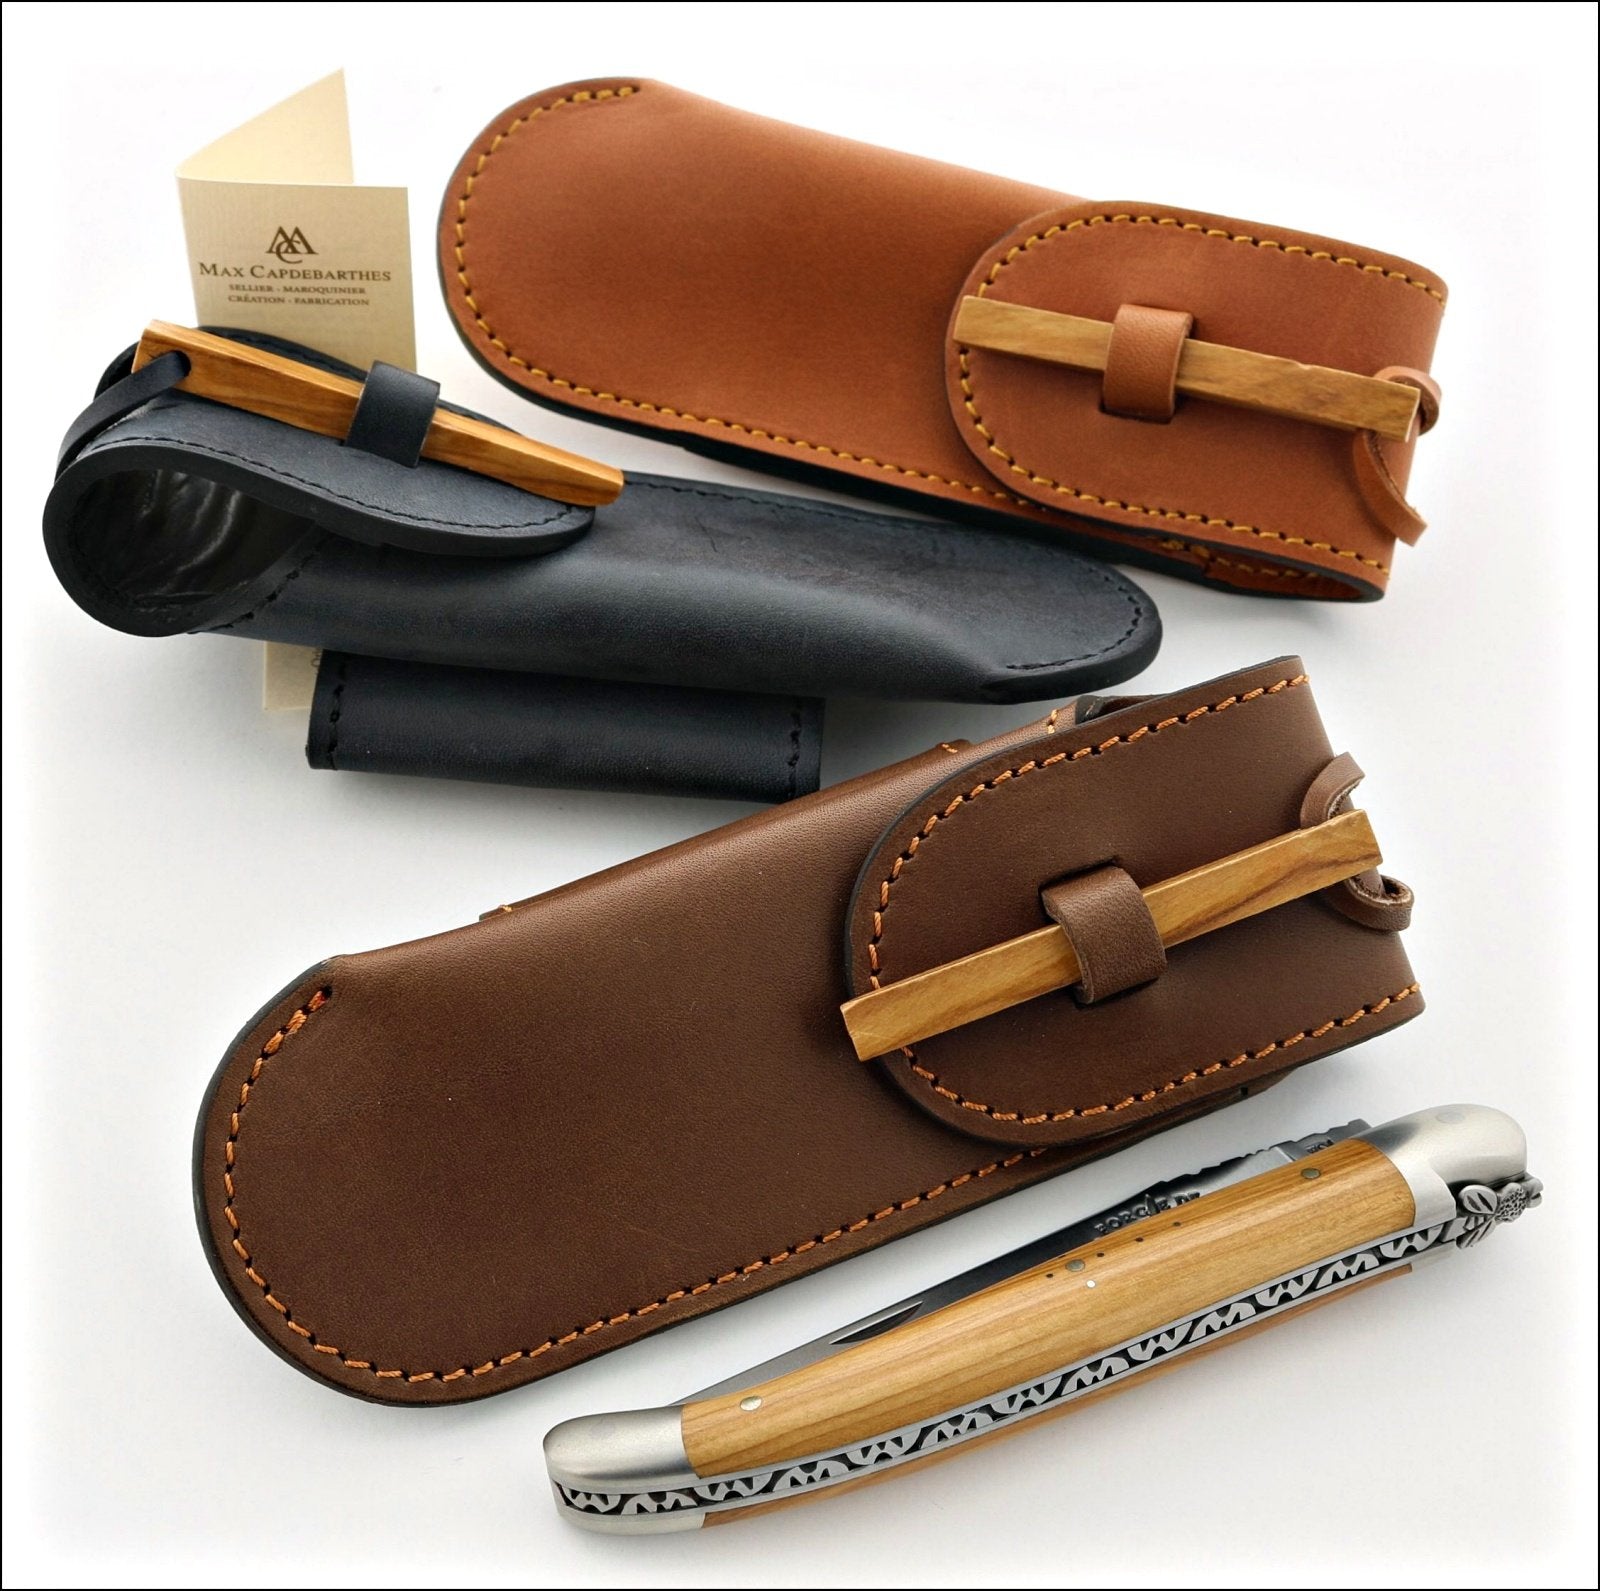 Trappeur Leather Sheath for 12 cm Pocket Knives-KNIFE SHEATHS